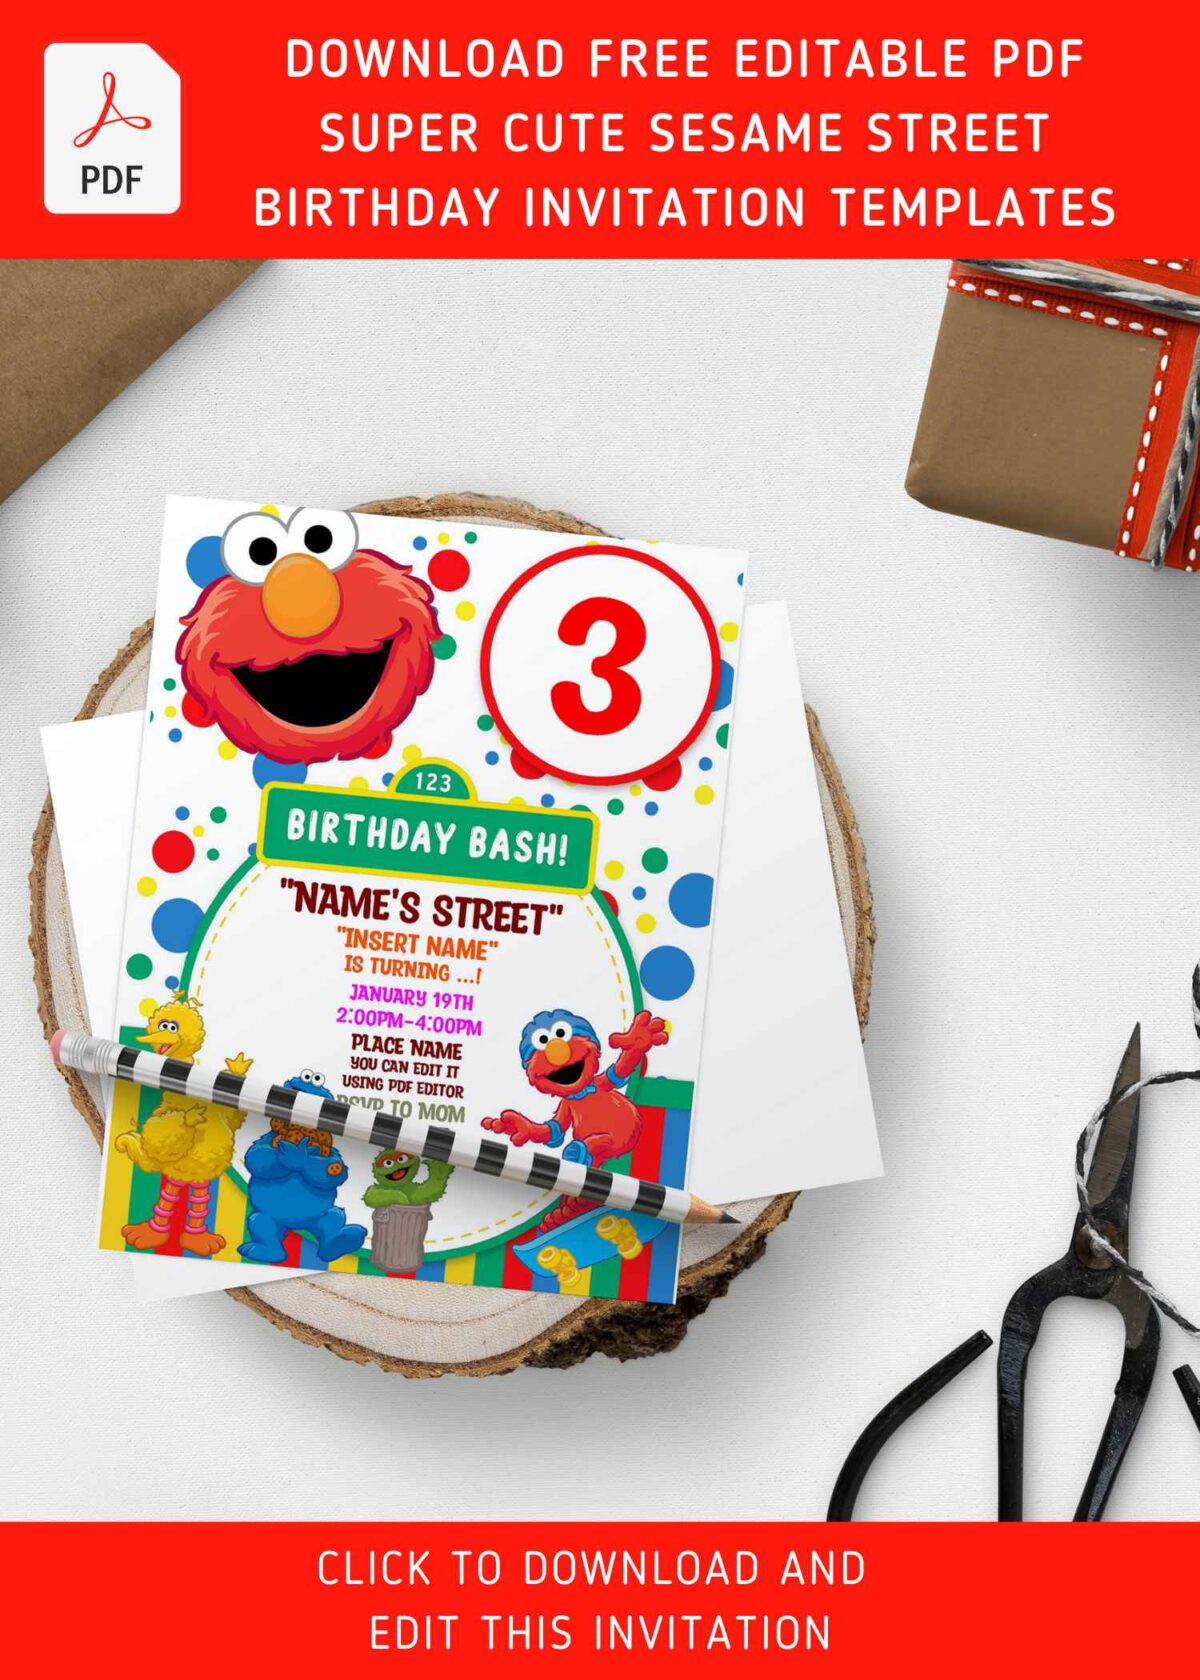 (Free Editable PDF) Super Cute Sesame Street Birthday Invitation Templates with Big Bird and Abby Codabby